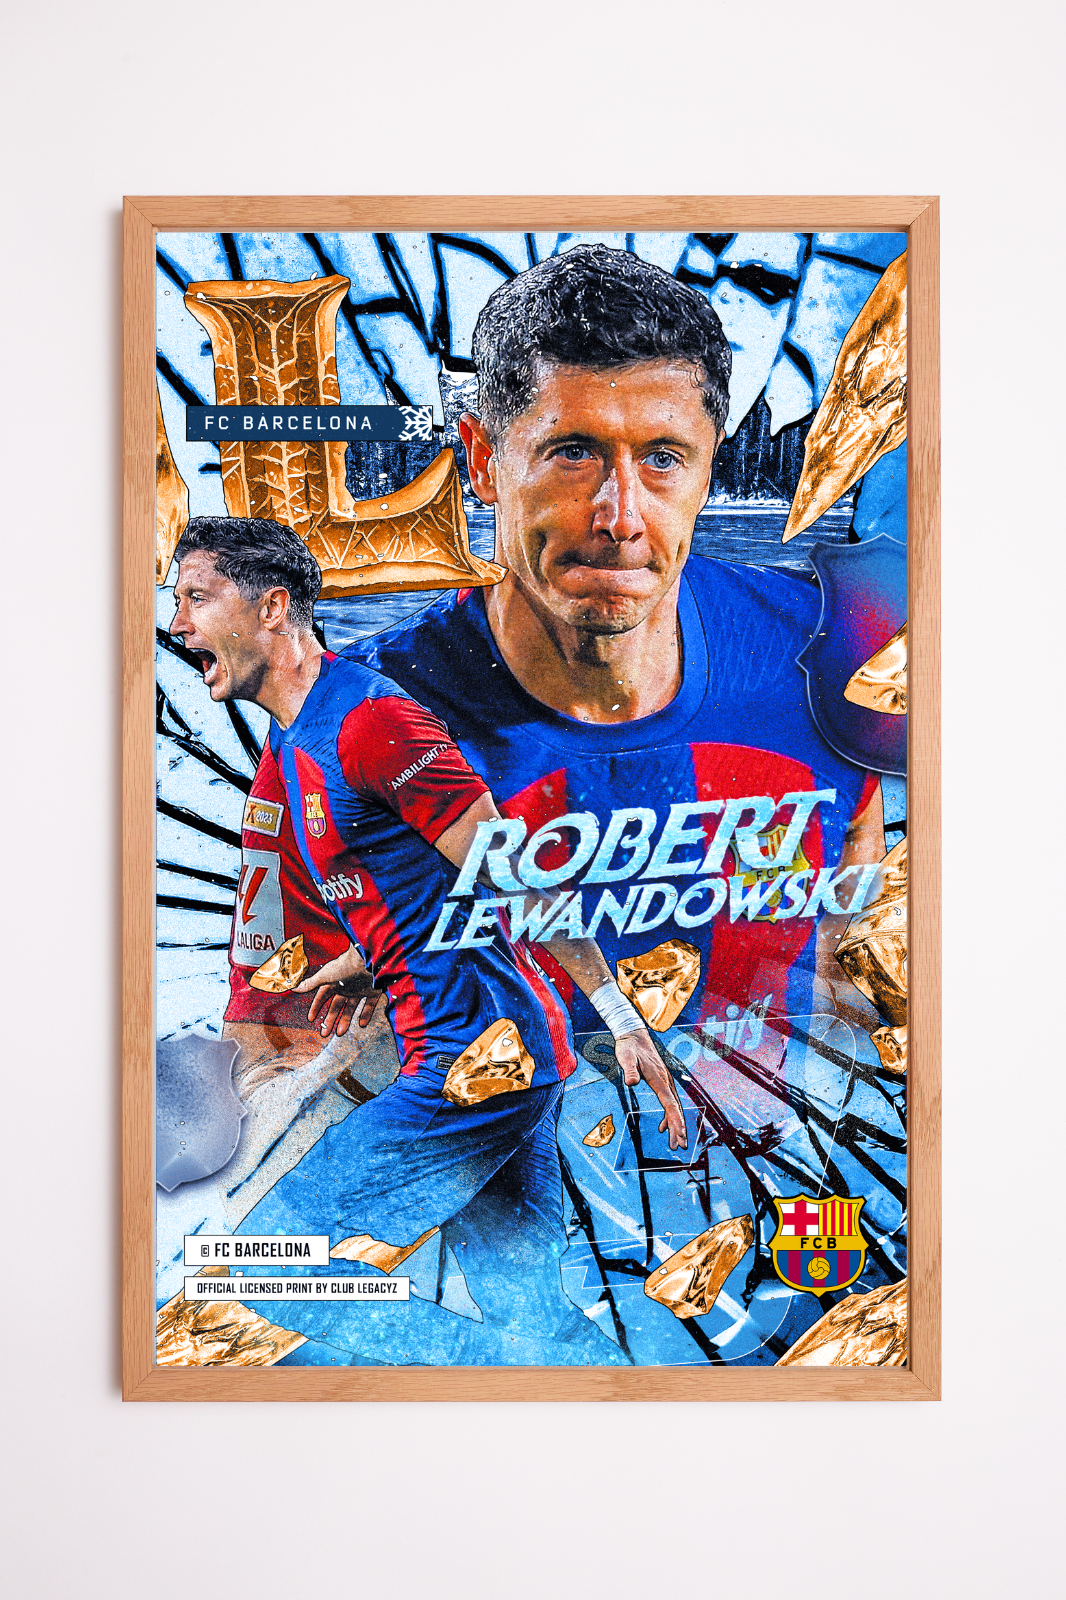 FC Barcelona - Robert Lewandowski Frozen Poster limited to 100